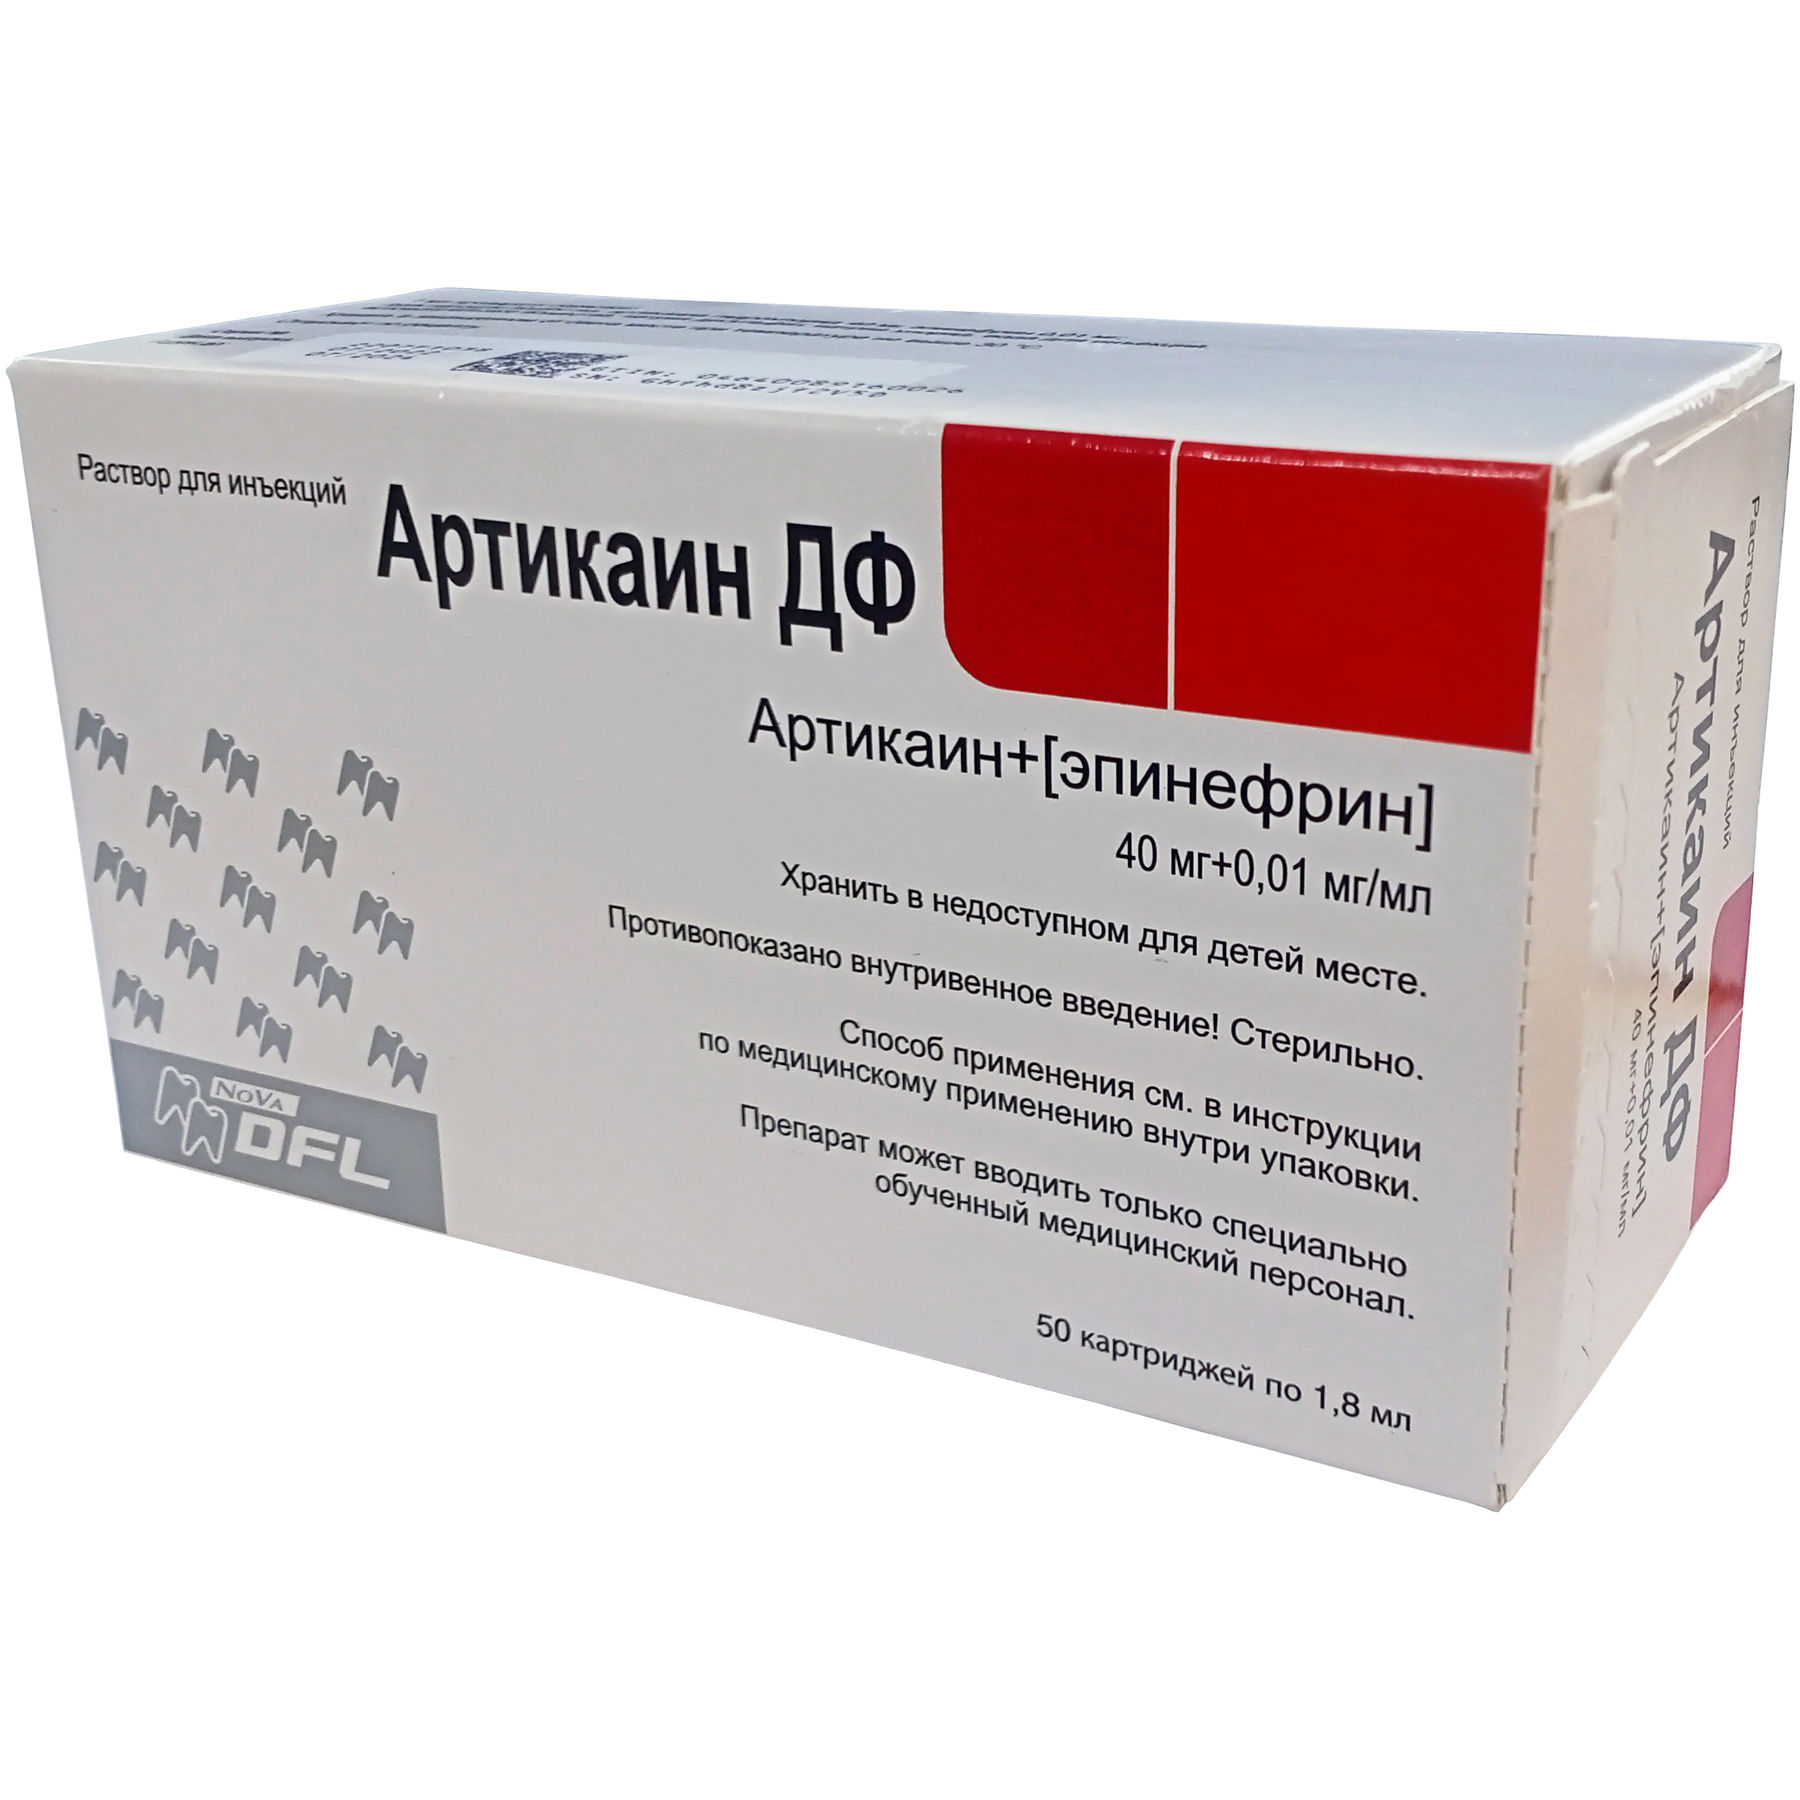 Анестетик Артикаин ДФ с адреналином 1:100 000 картриджи 50х1.8мл DFL .